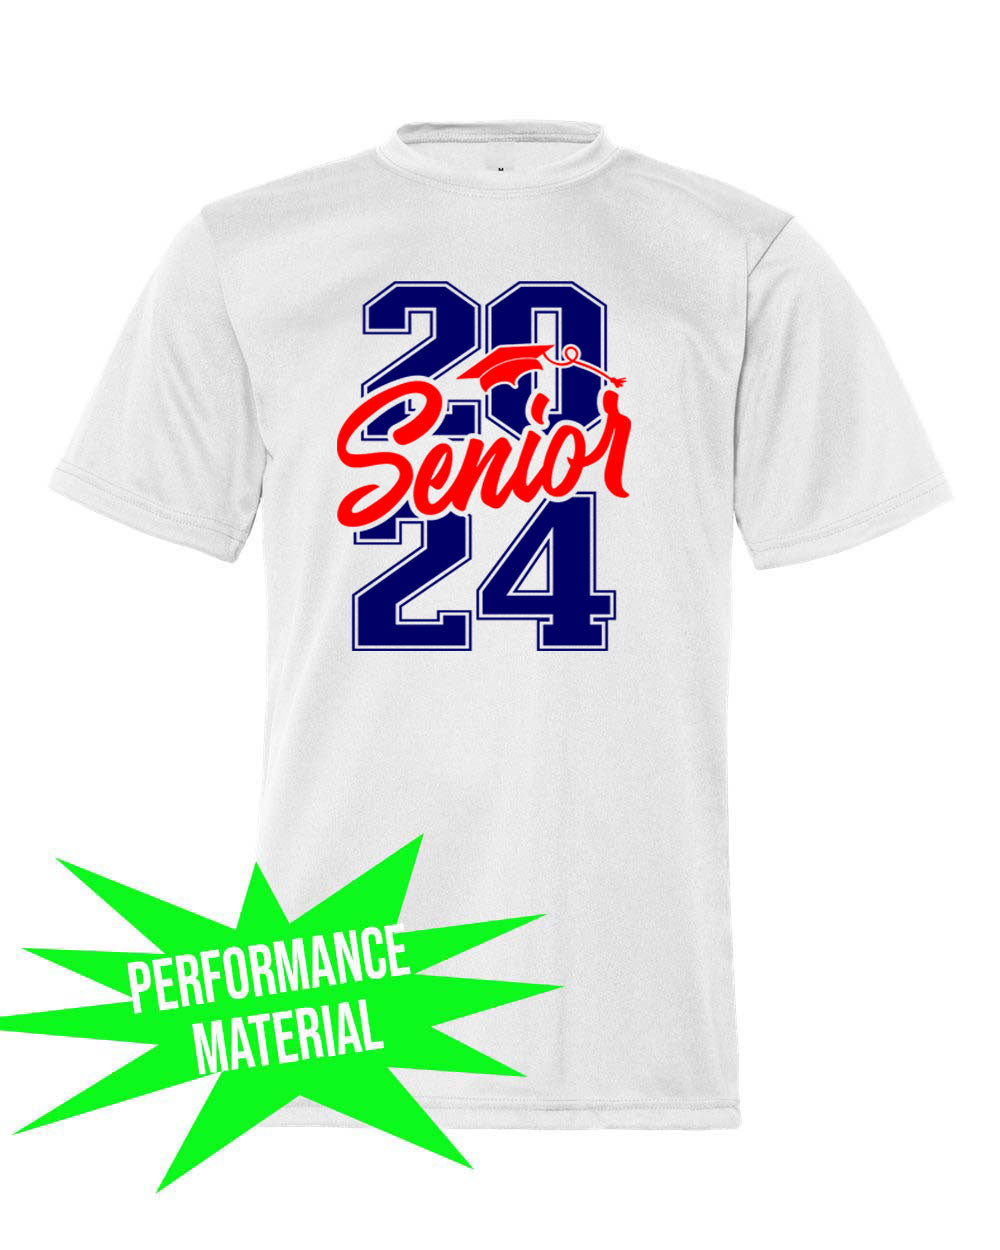 North Warren Performance Material design 12 T-Shirt